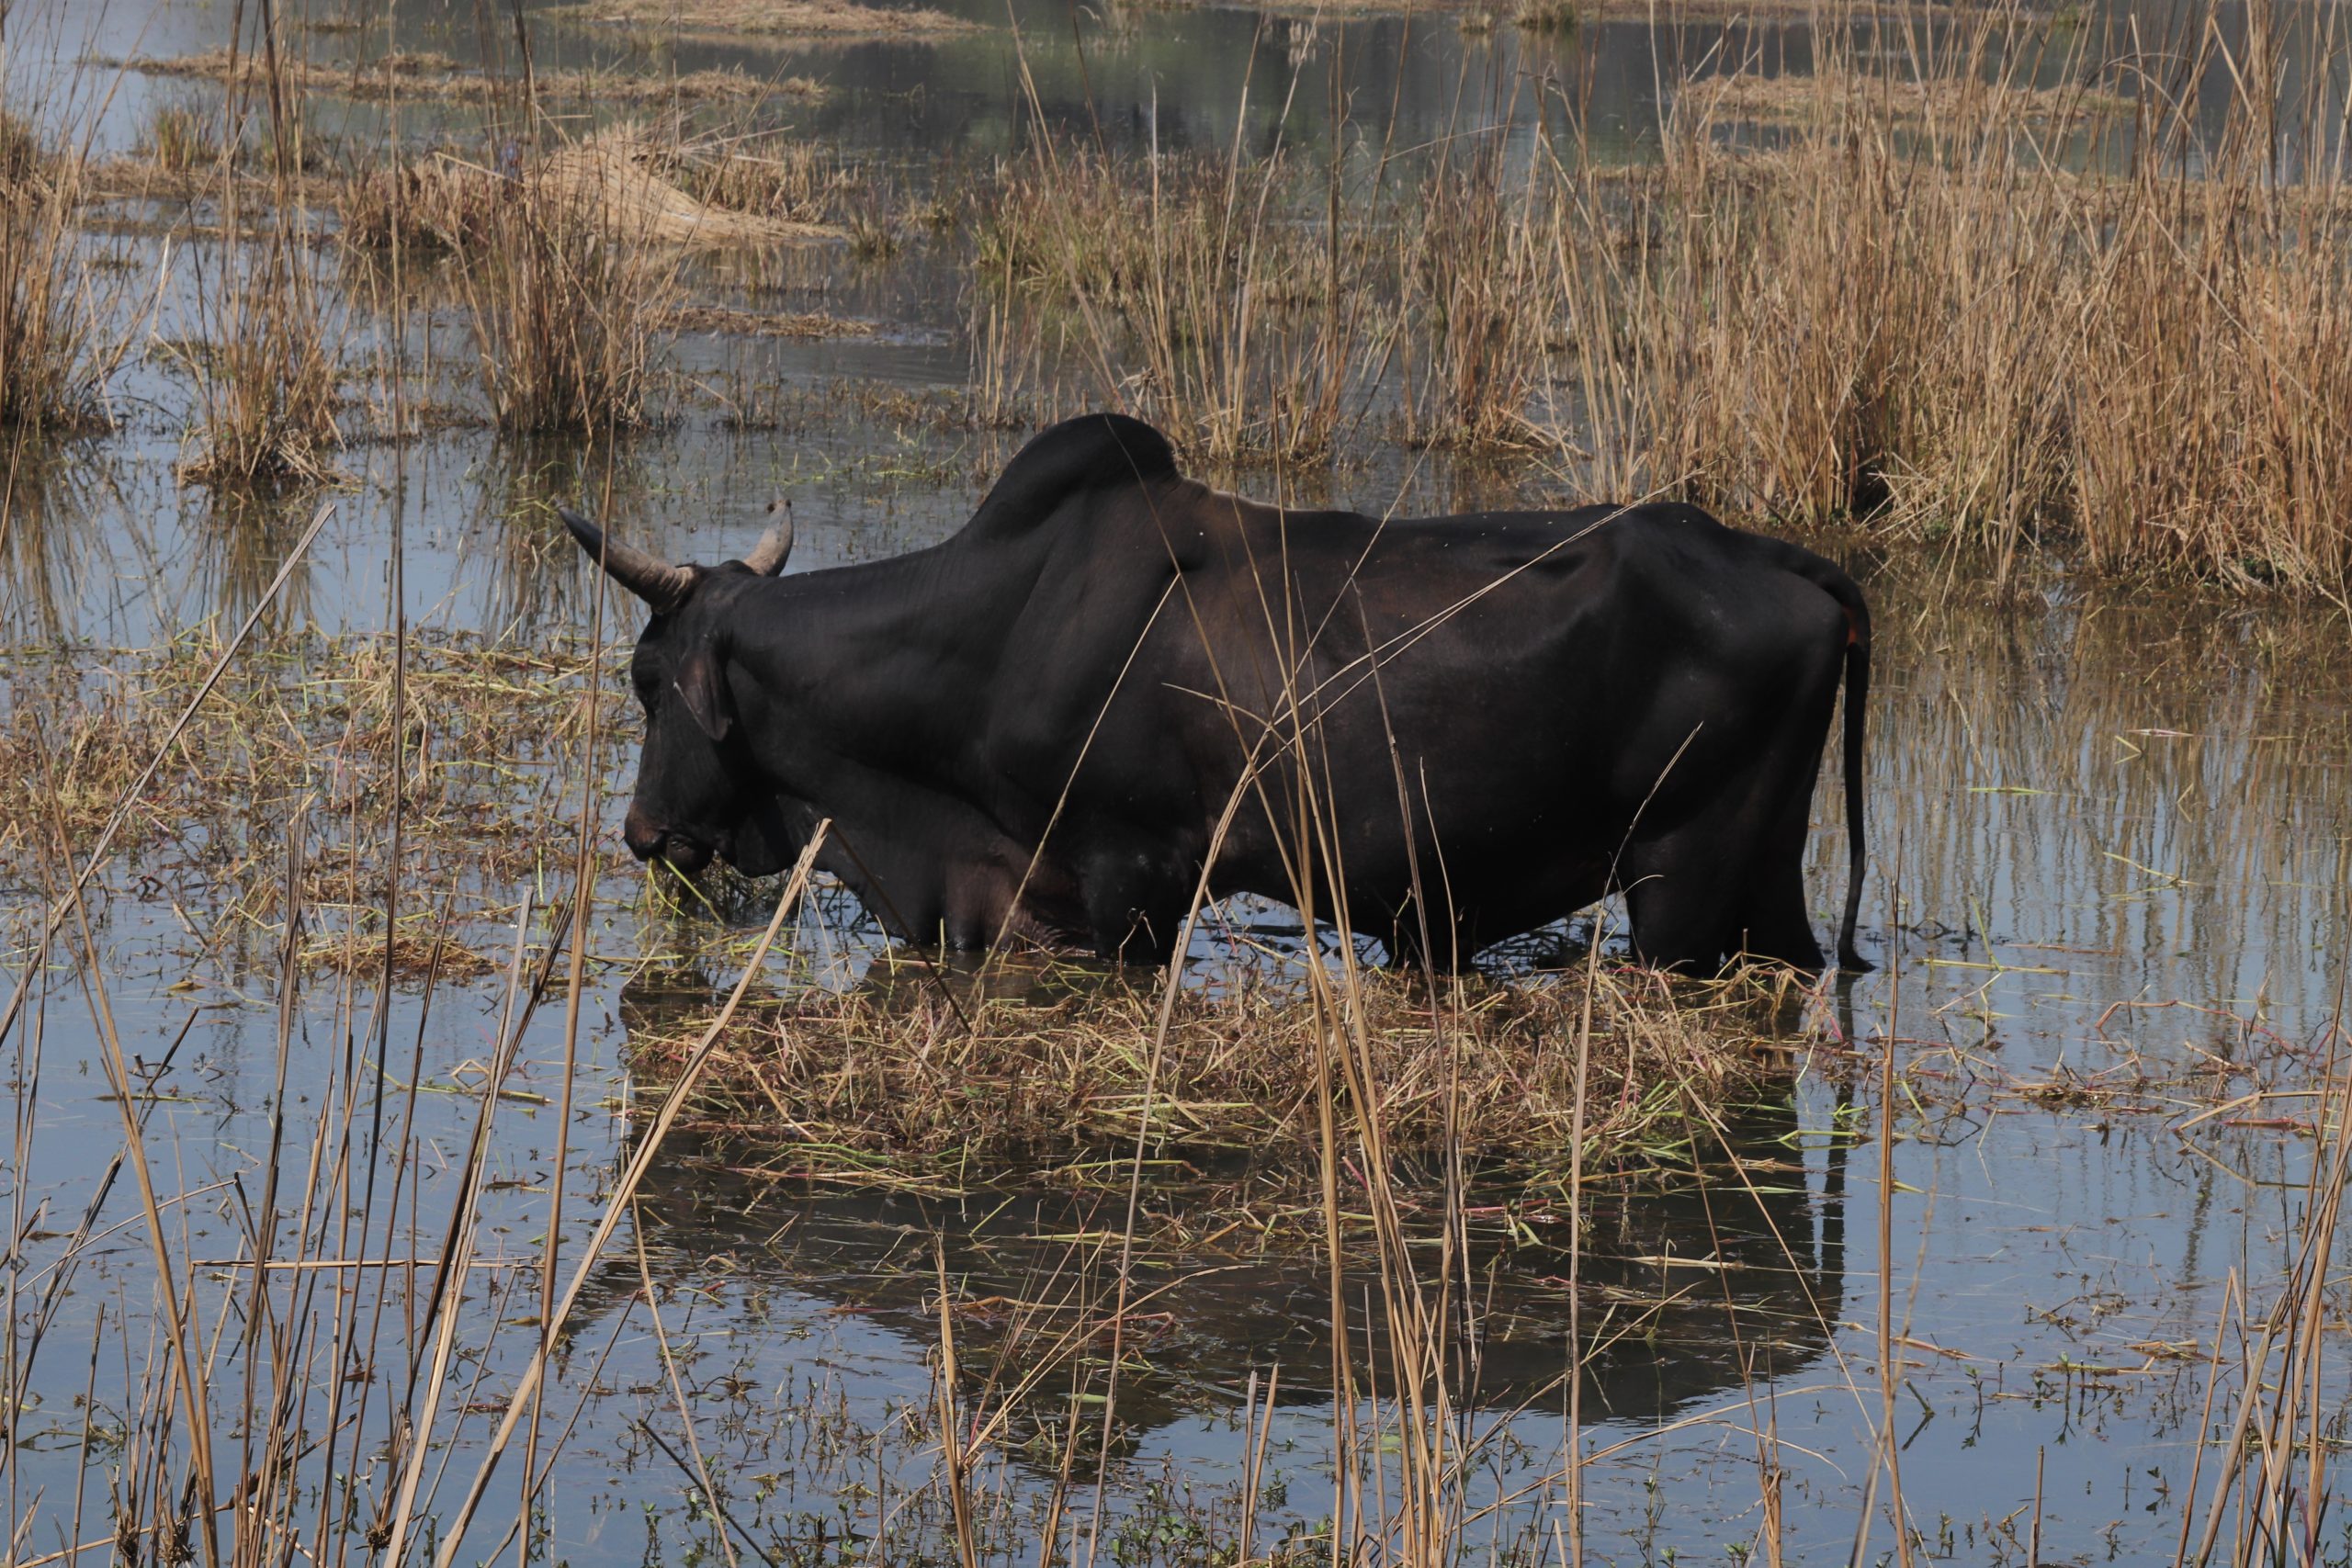 Bull in the wetland.